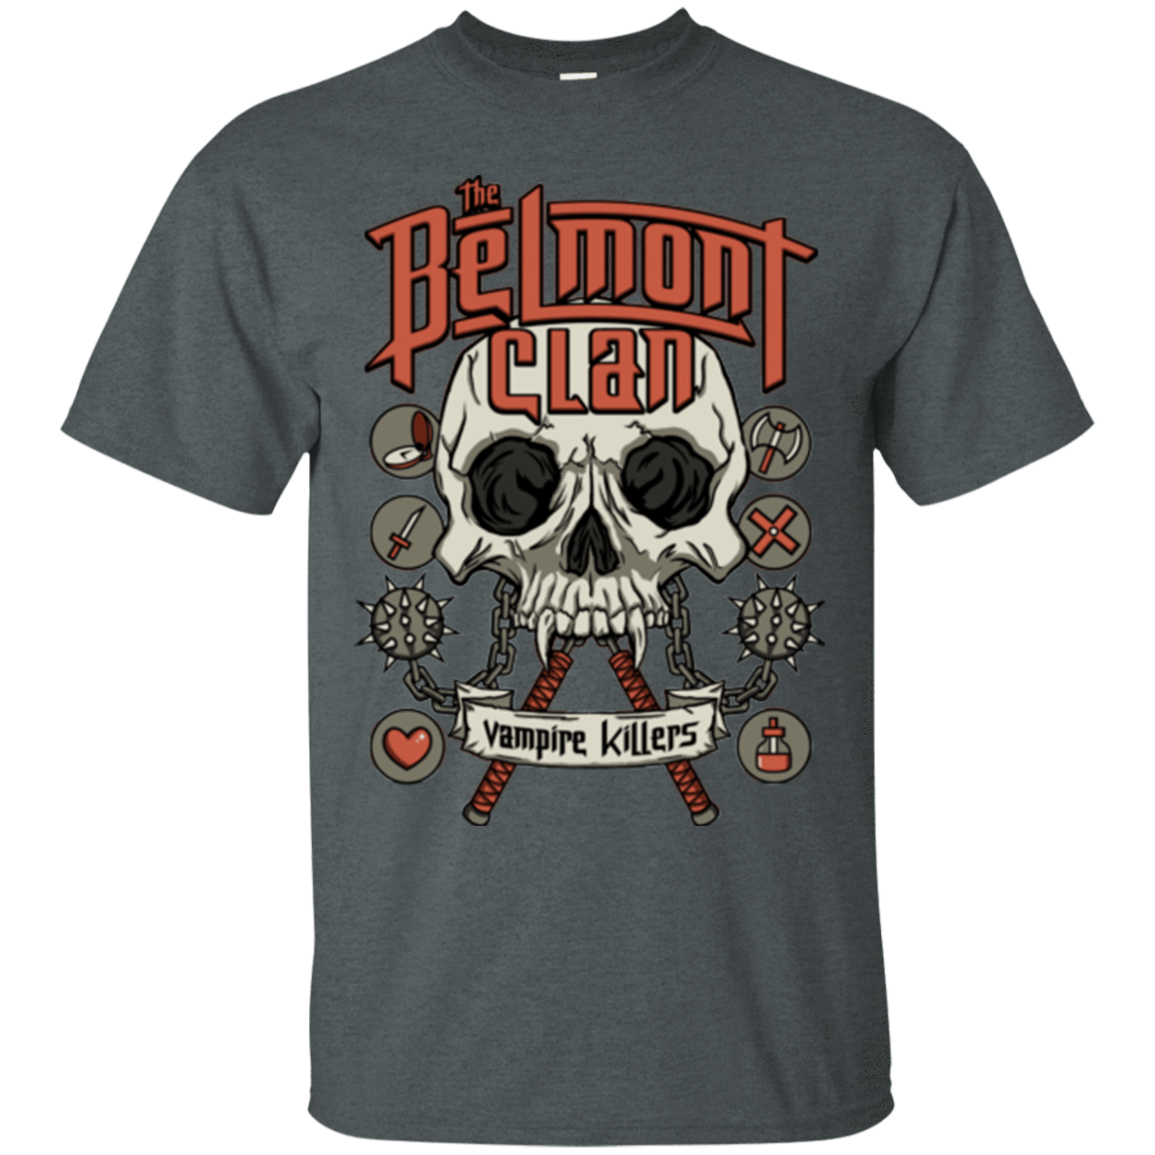 T-Shirts Dark Heather / Small Belmont Clan T-Shirt